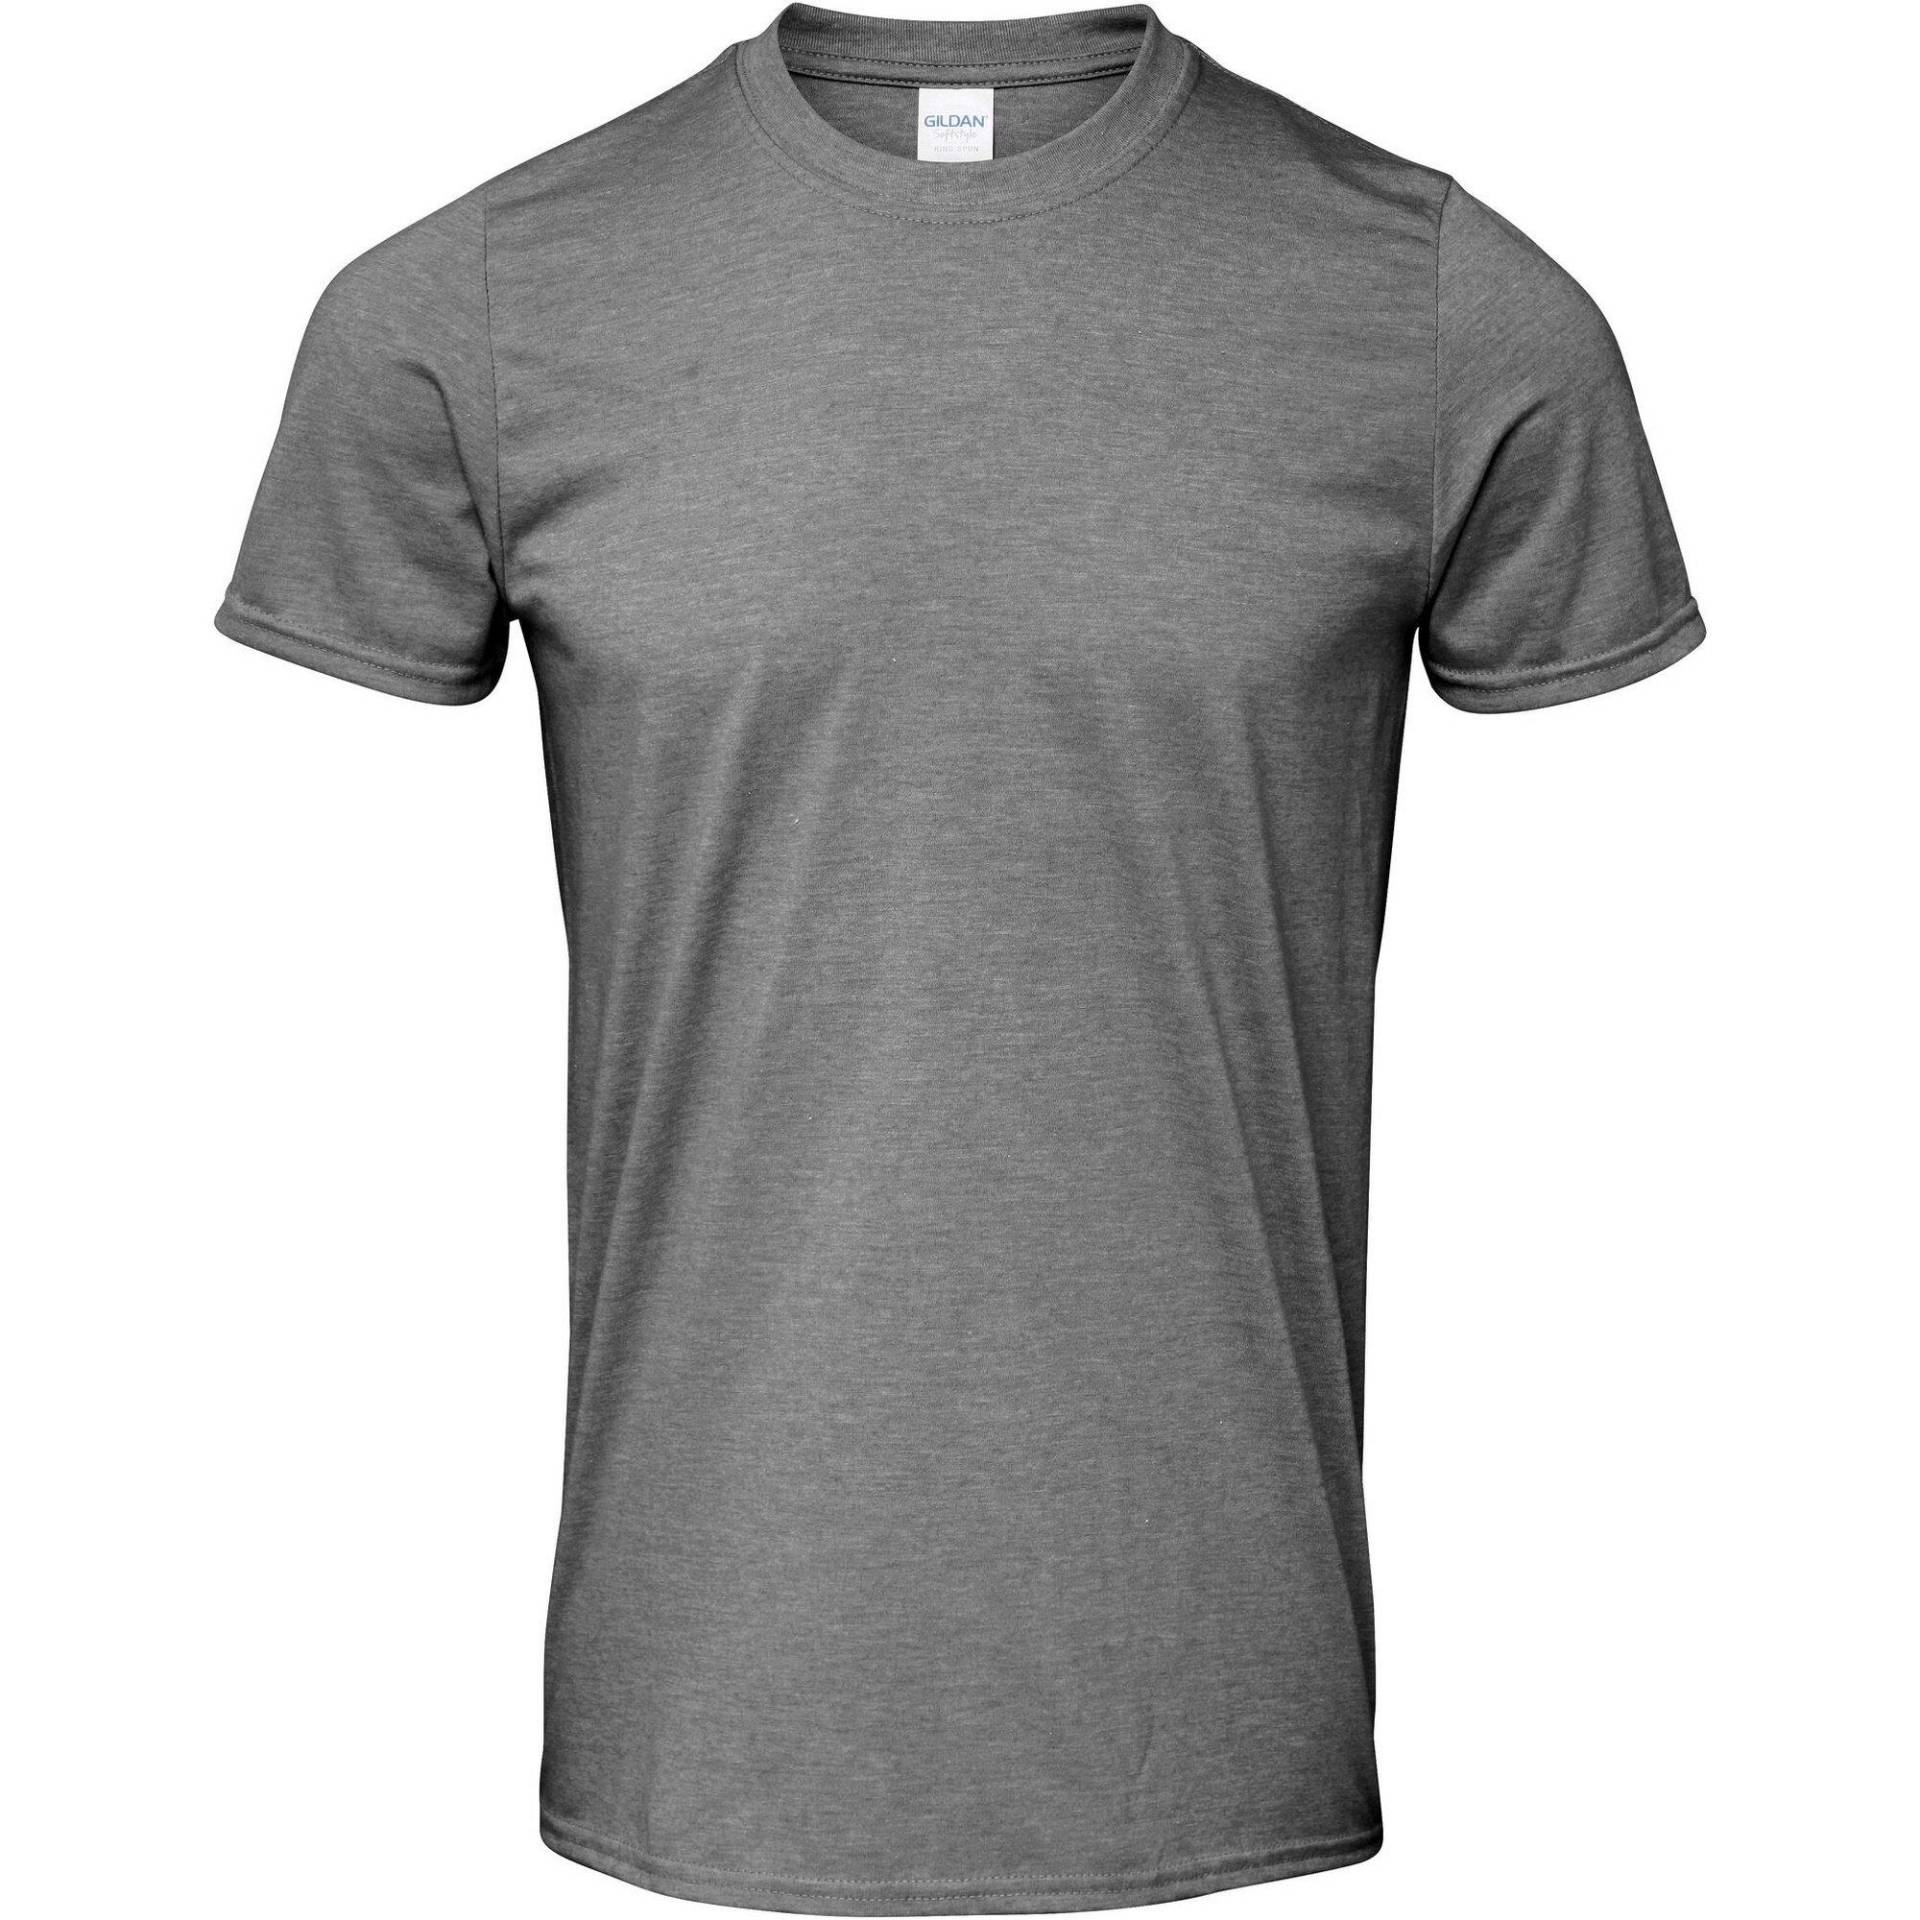 Softstyle Tshirt, Kurzarm Herren Taubengrau XL von Gildan